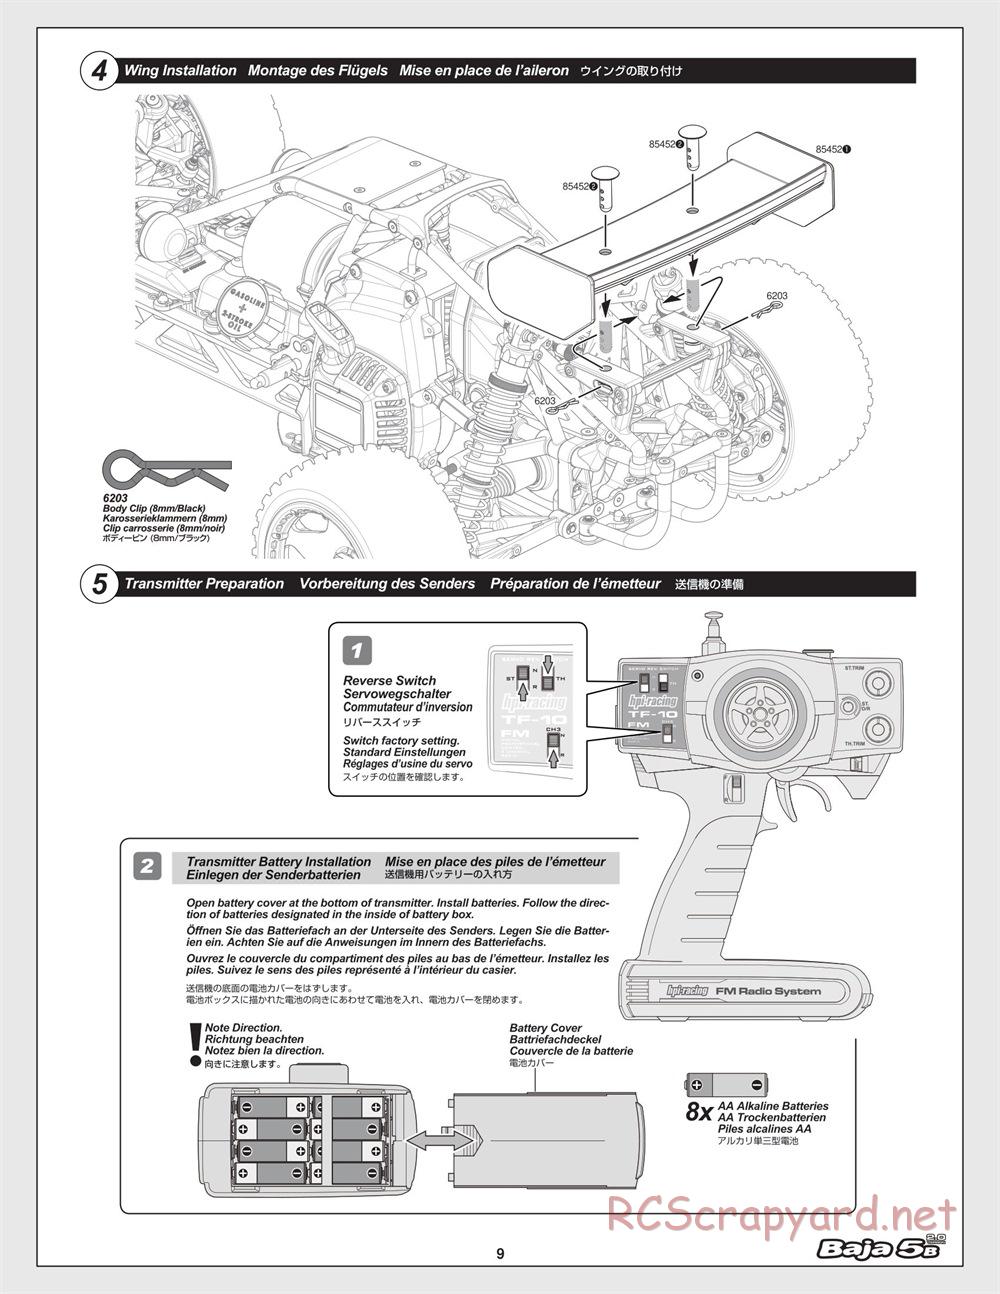 HPI - Baja 5B 2.0 - Manual - Page 9